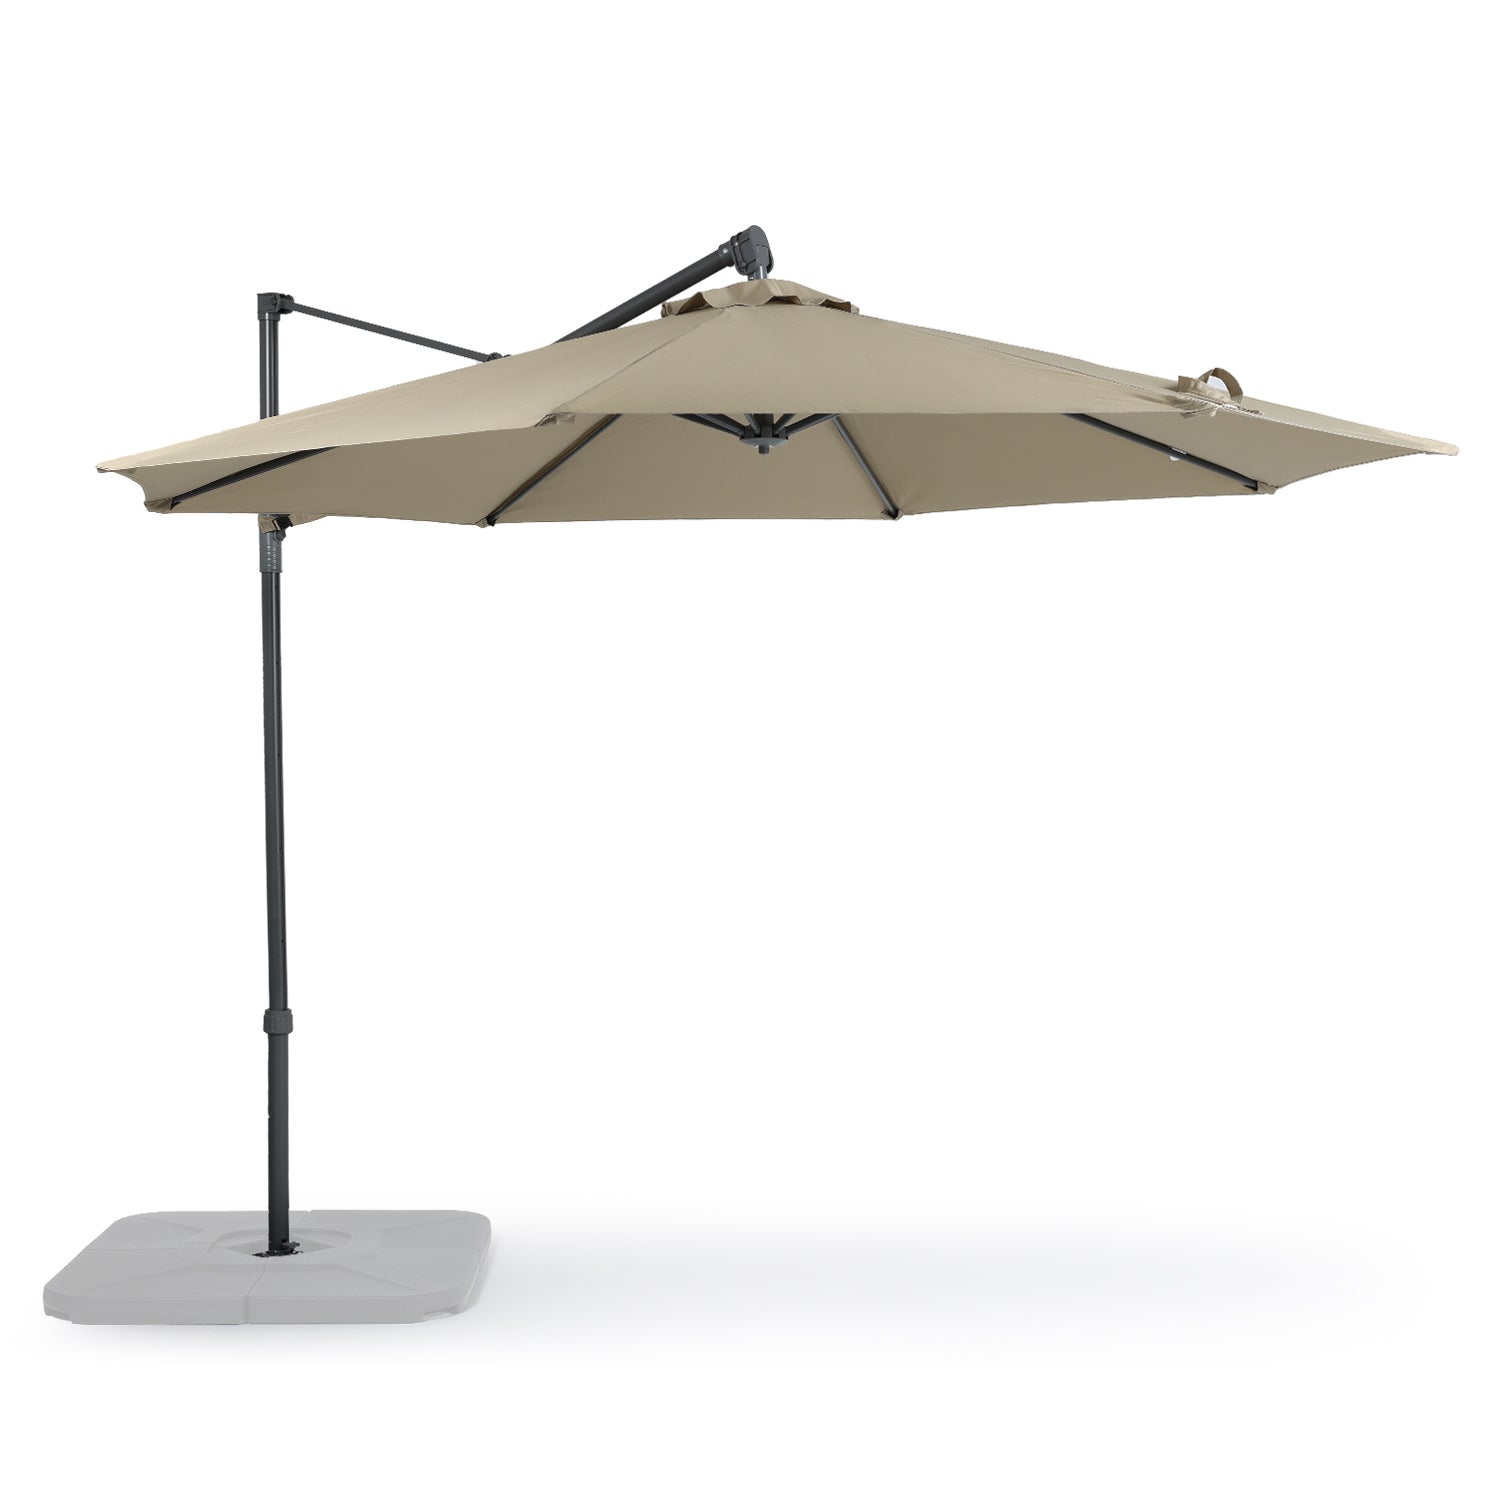 10FT Off-set Hanging Umbrella - Premium Aluminum Cantilever Umbrella for Backyard/Garden - Waterproof, UV-Resistant Outdoor Shade Patio Umbrella Aoodor LLC 9.8 x 8.2 Ft (With 6 adjustable stalls) Brown 